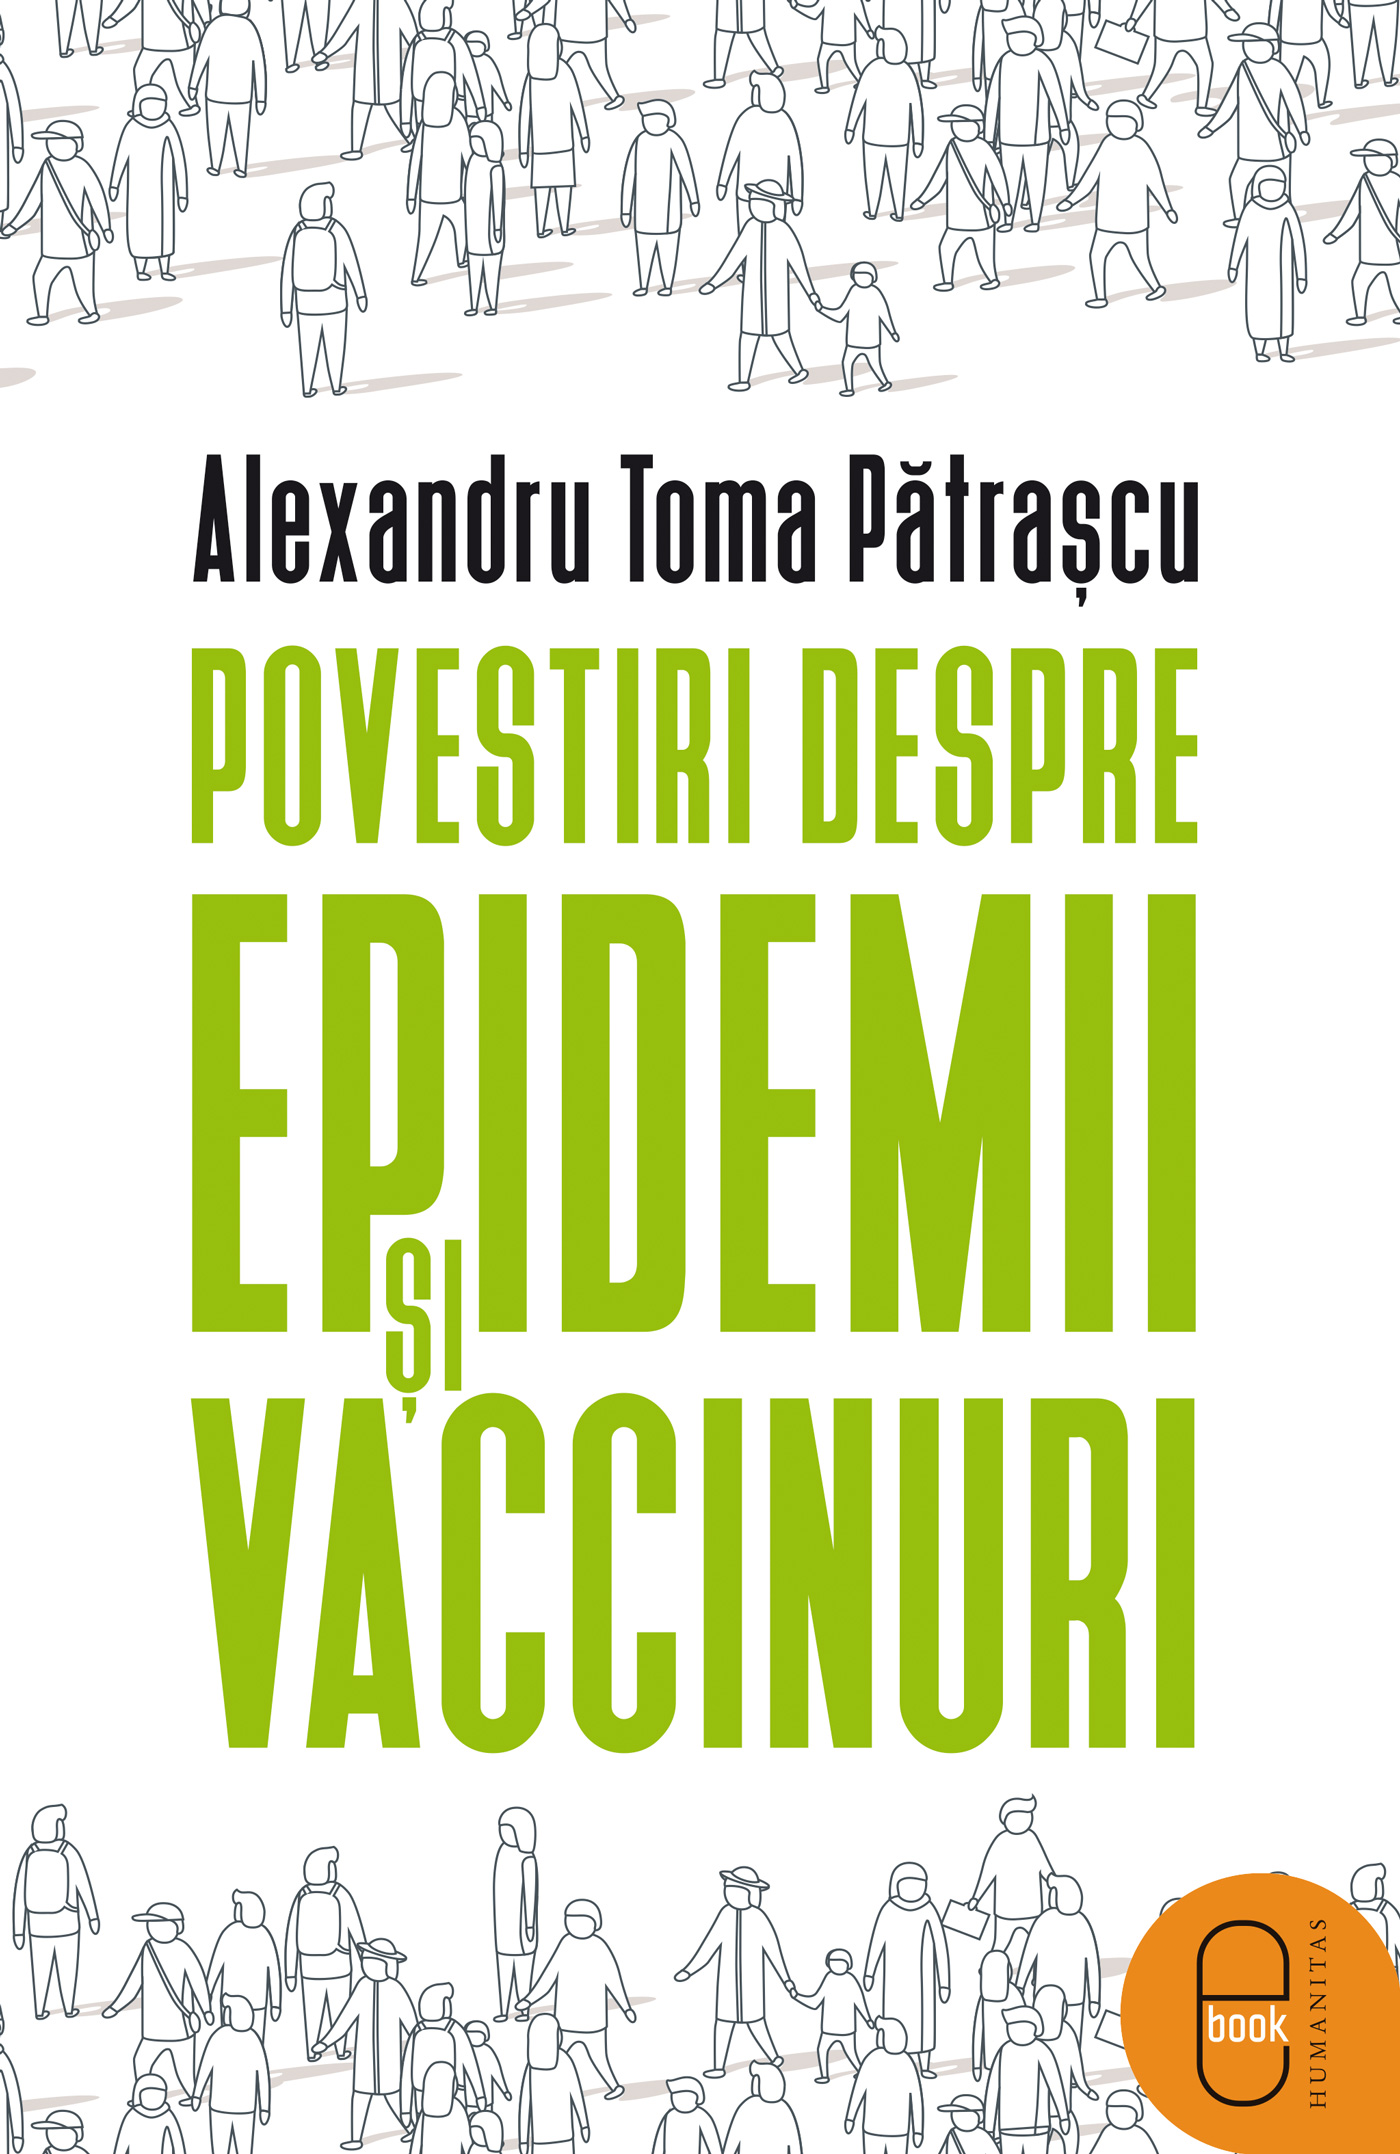 Povestiri despre epidemii și vaccinuri (pdf)